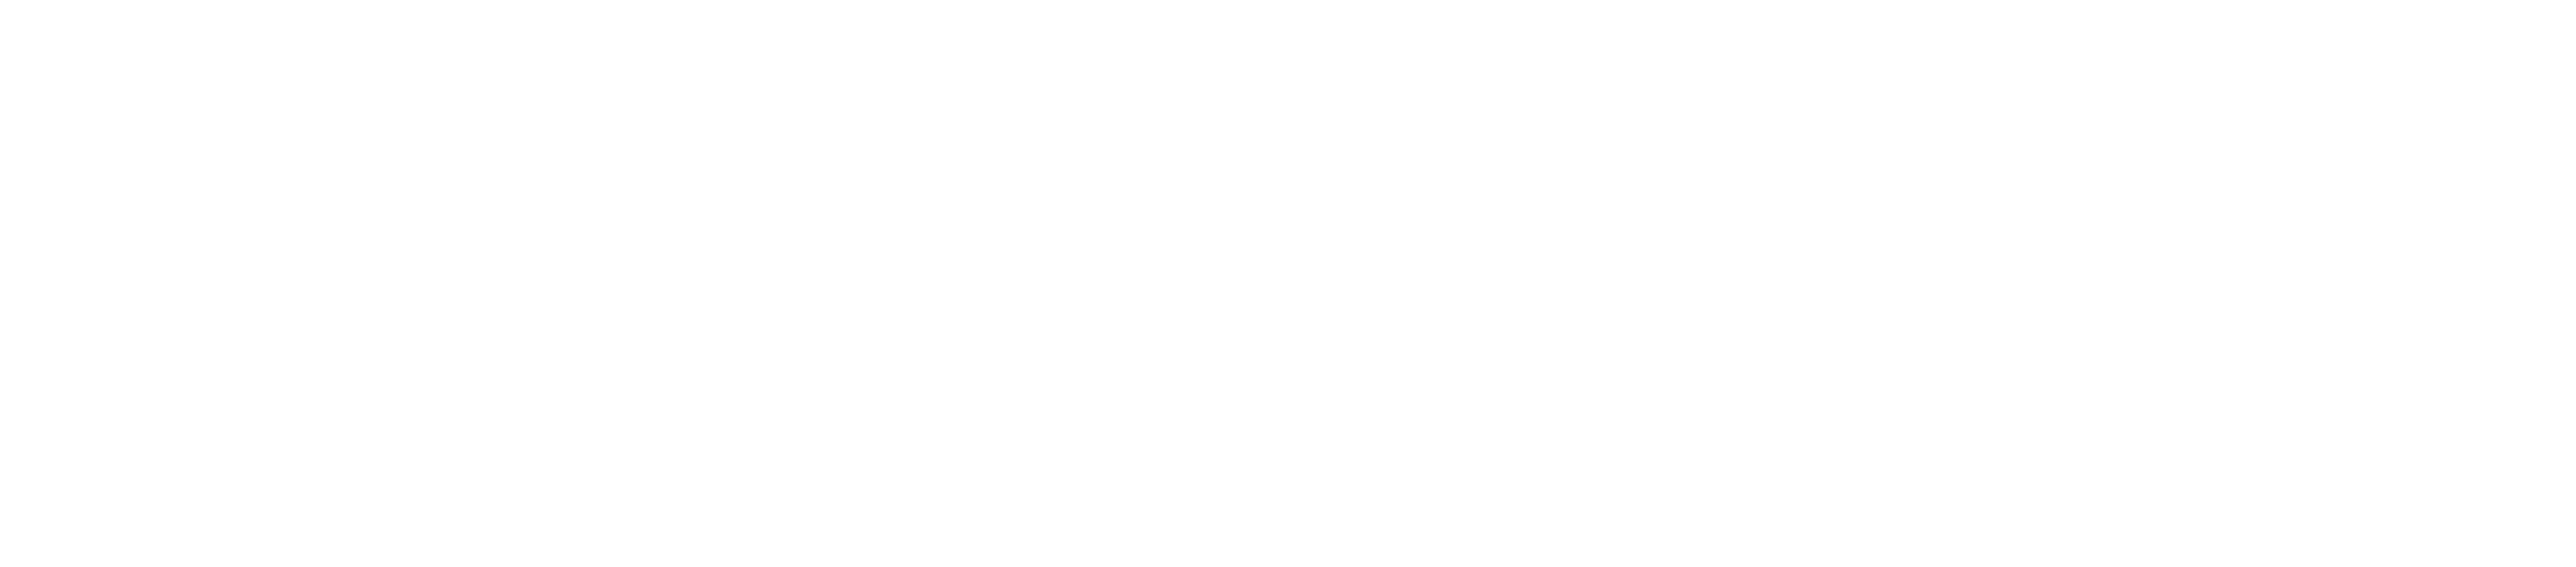 The Wine Club White Logo | The Wine Club Philippines